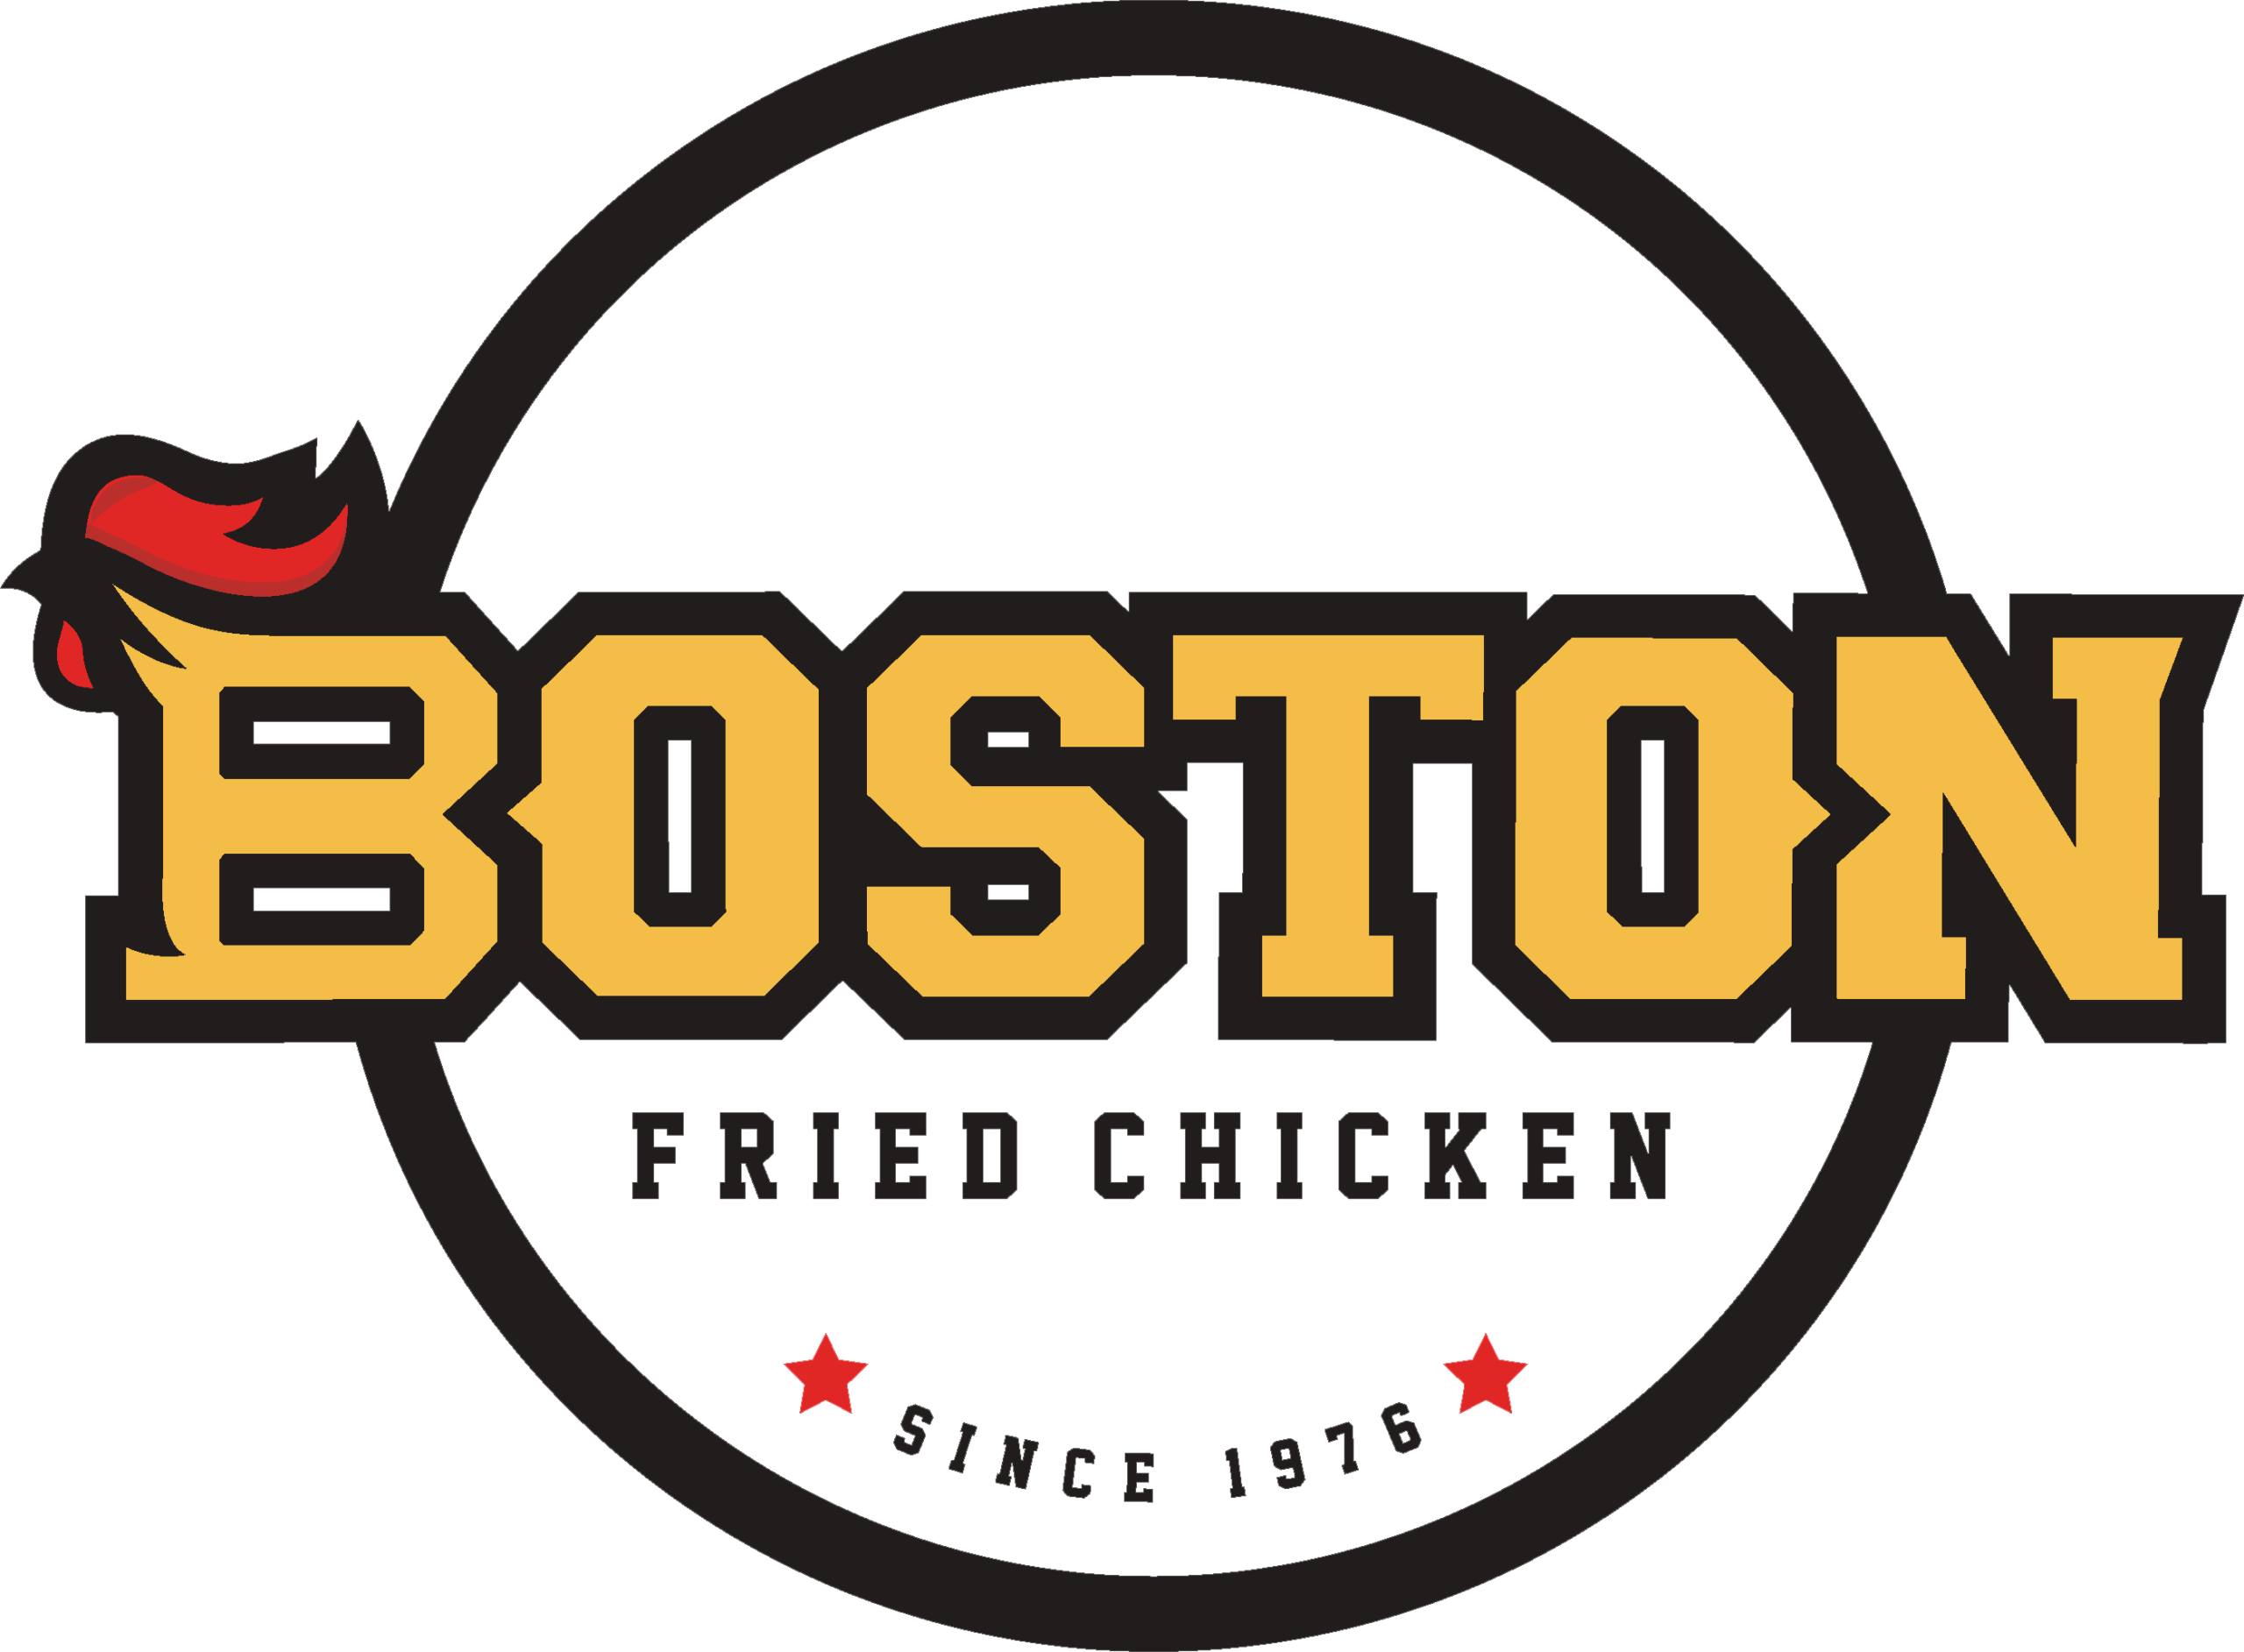 Boston Fried Chicken